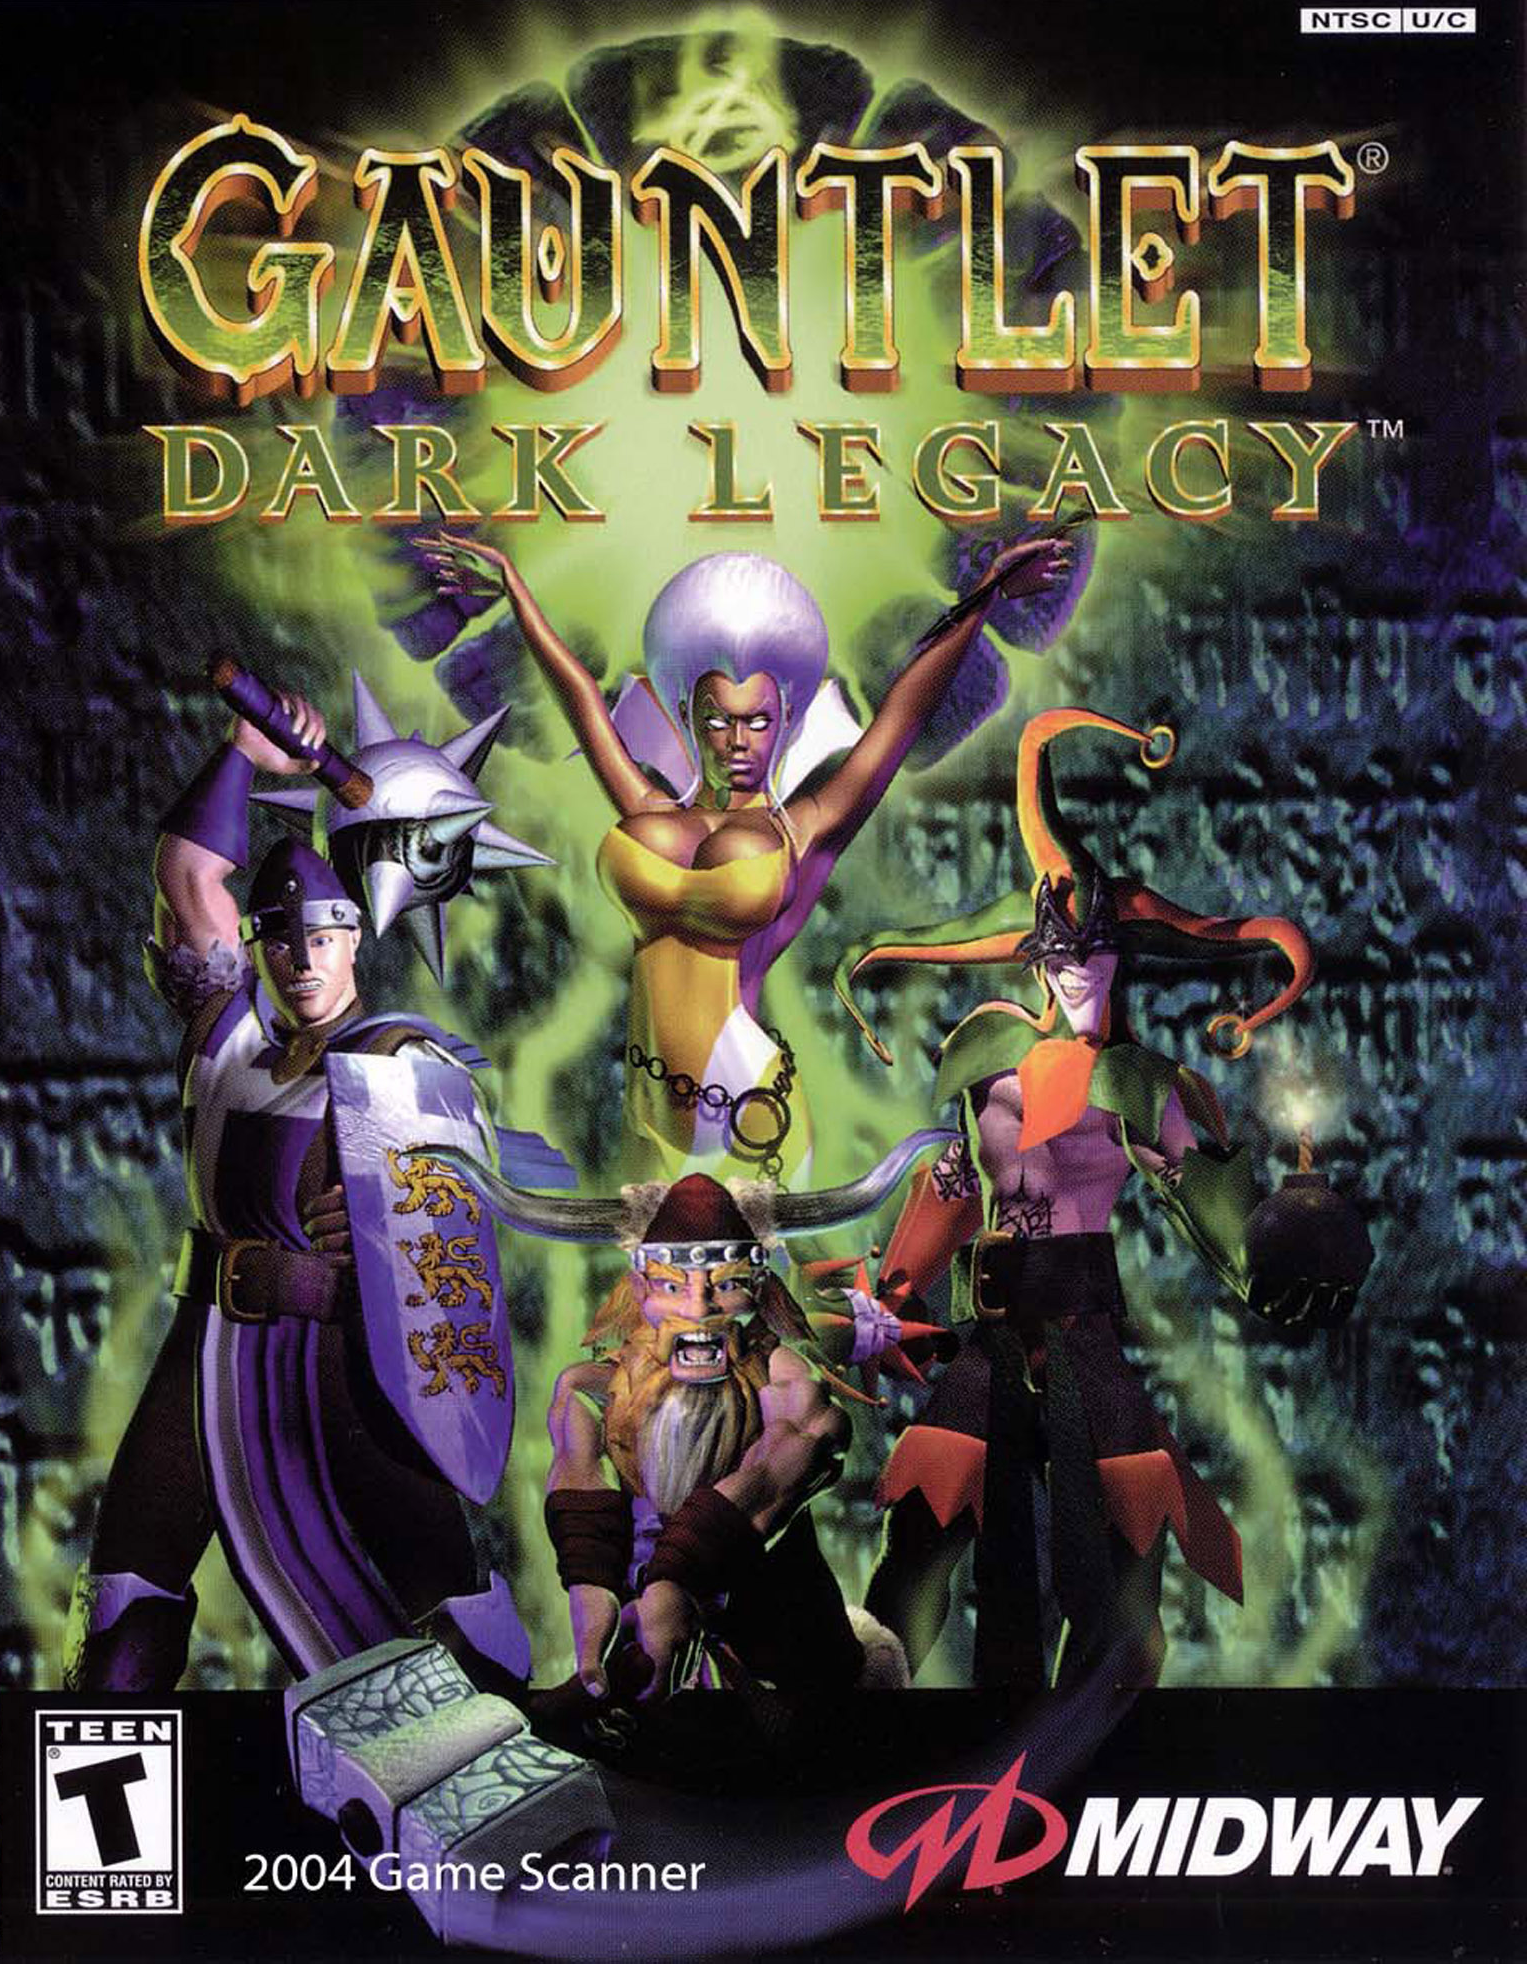 PS2 - Theme Gothic Fantasy